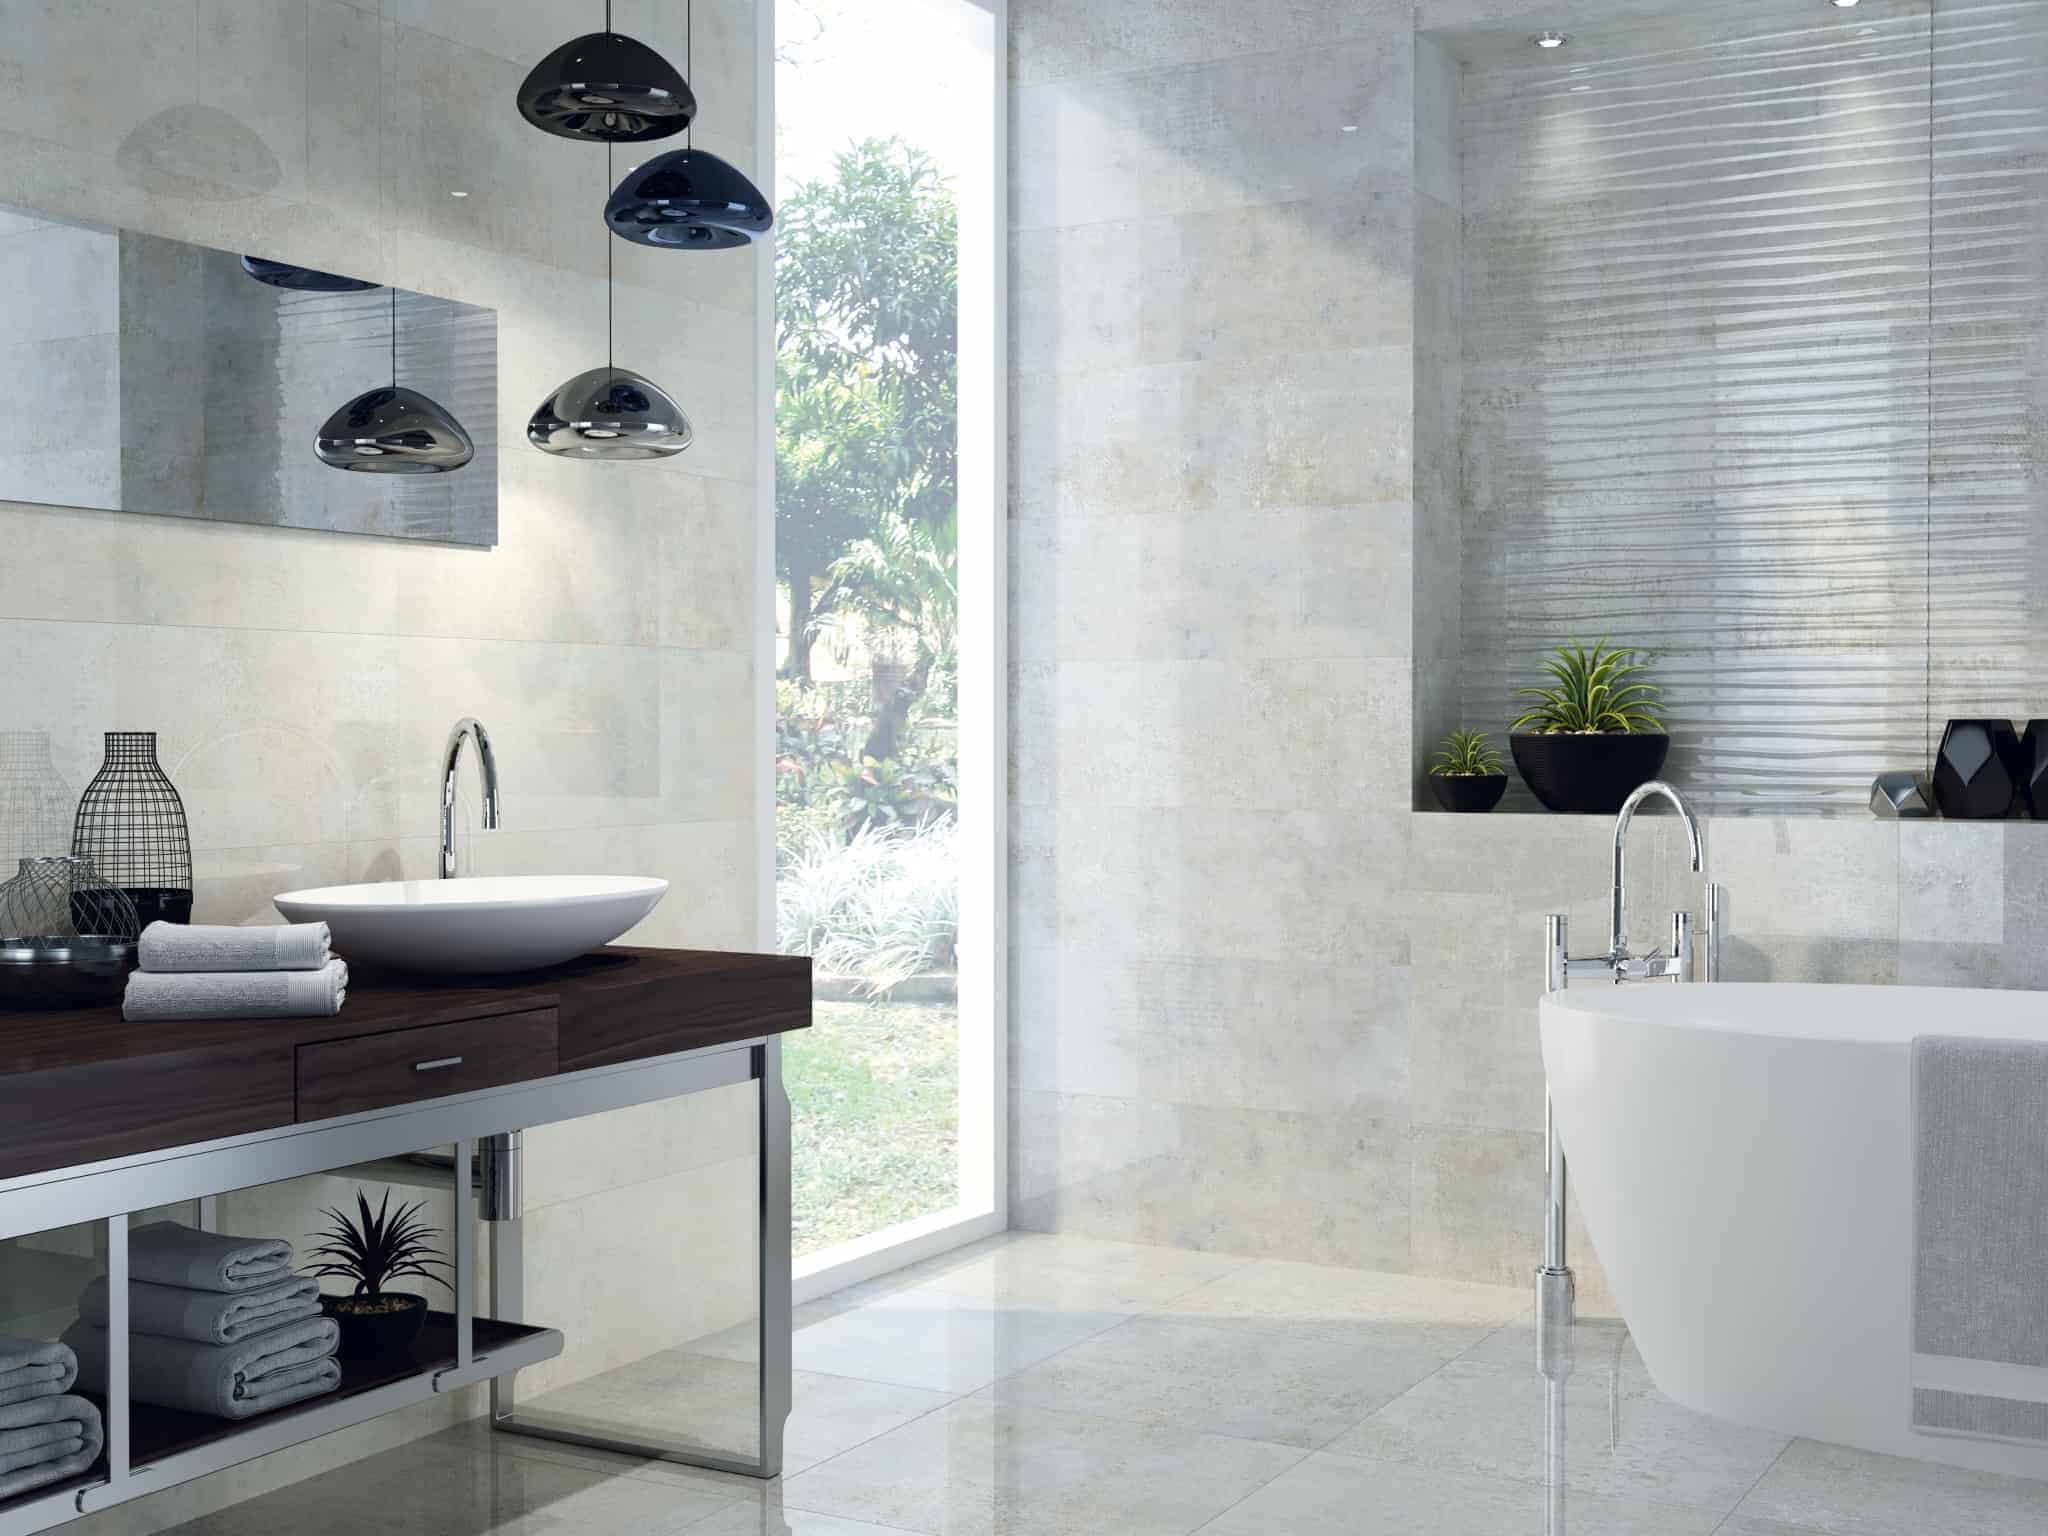 Bathroom Suite at Emerald Tiles